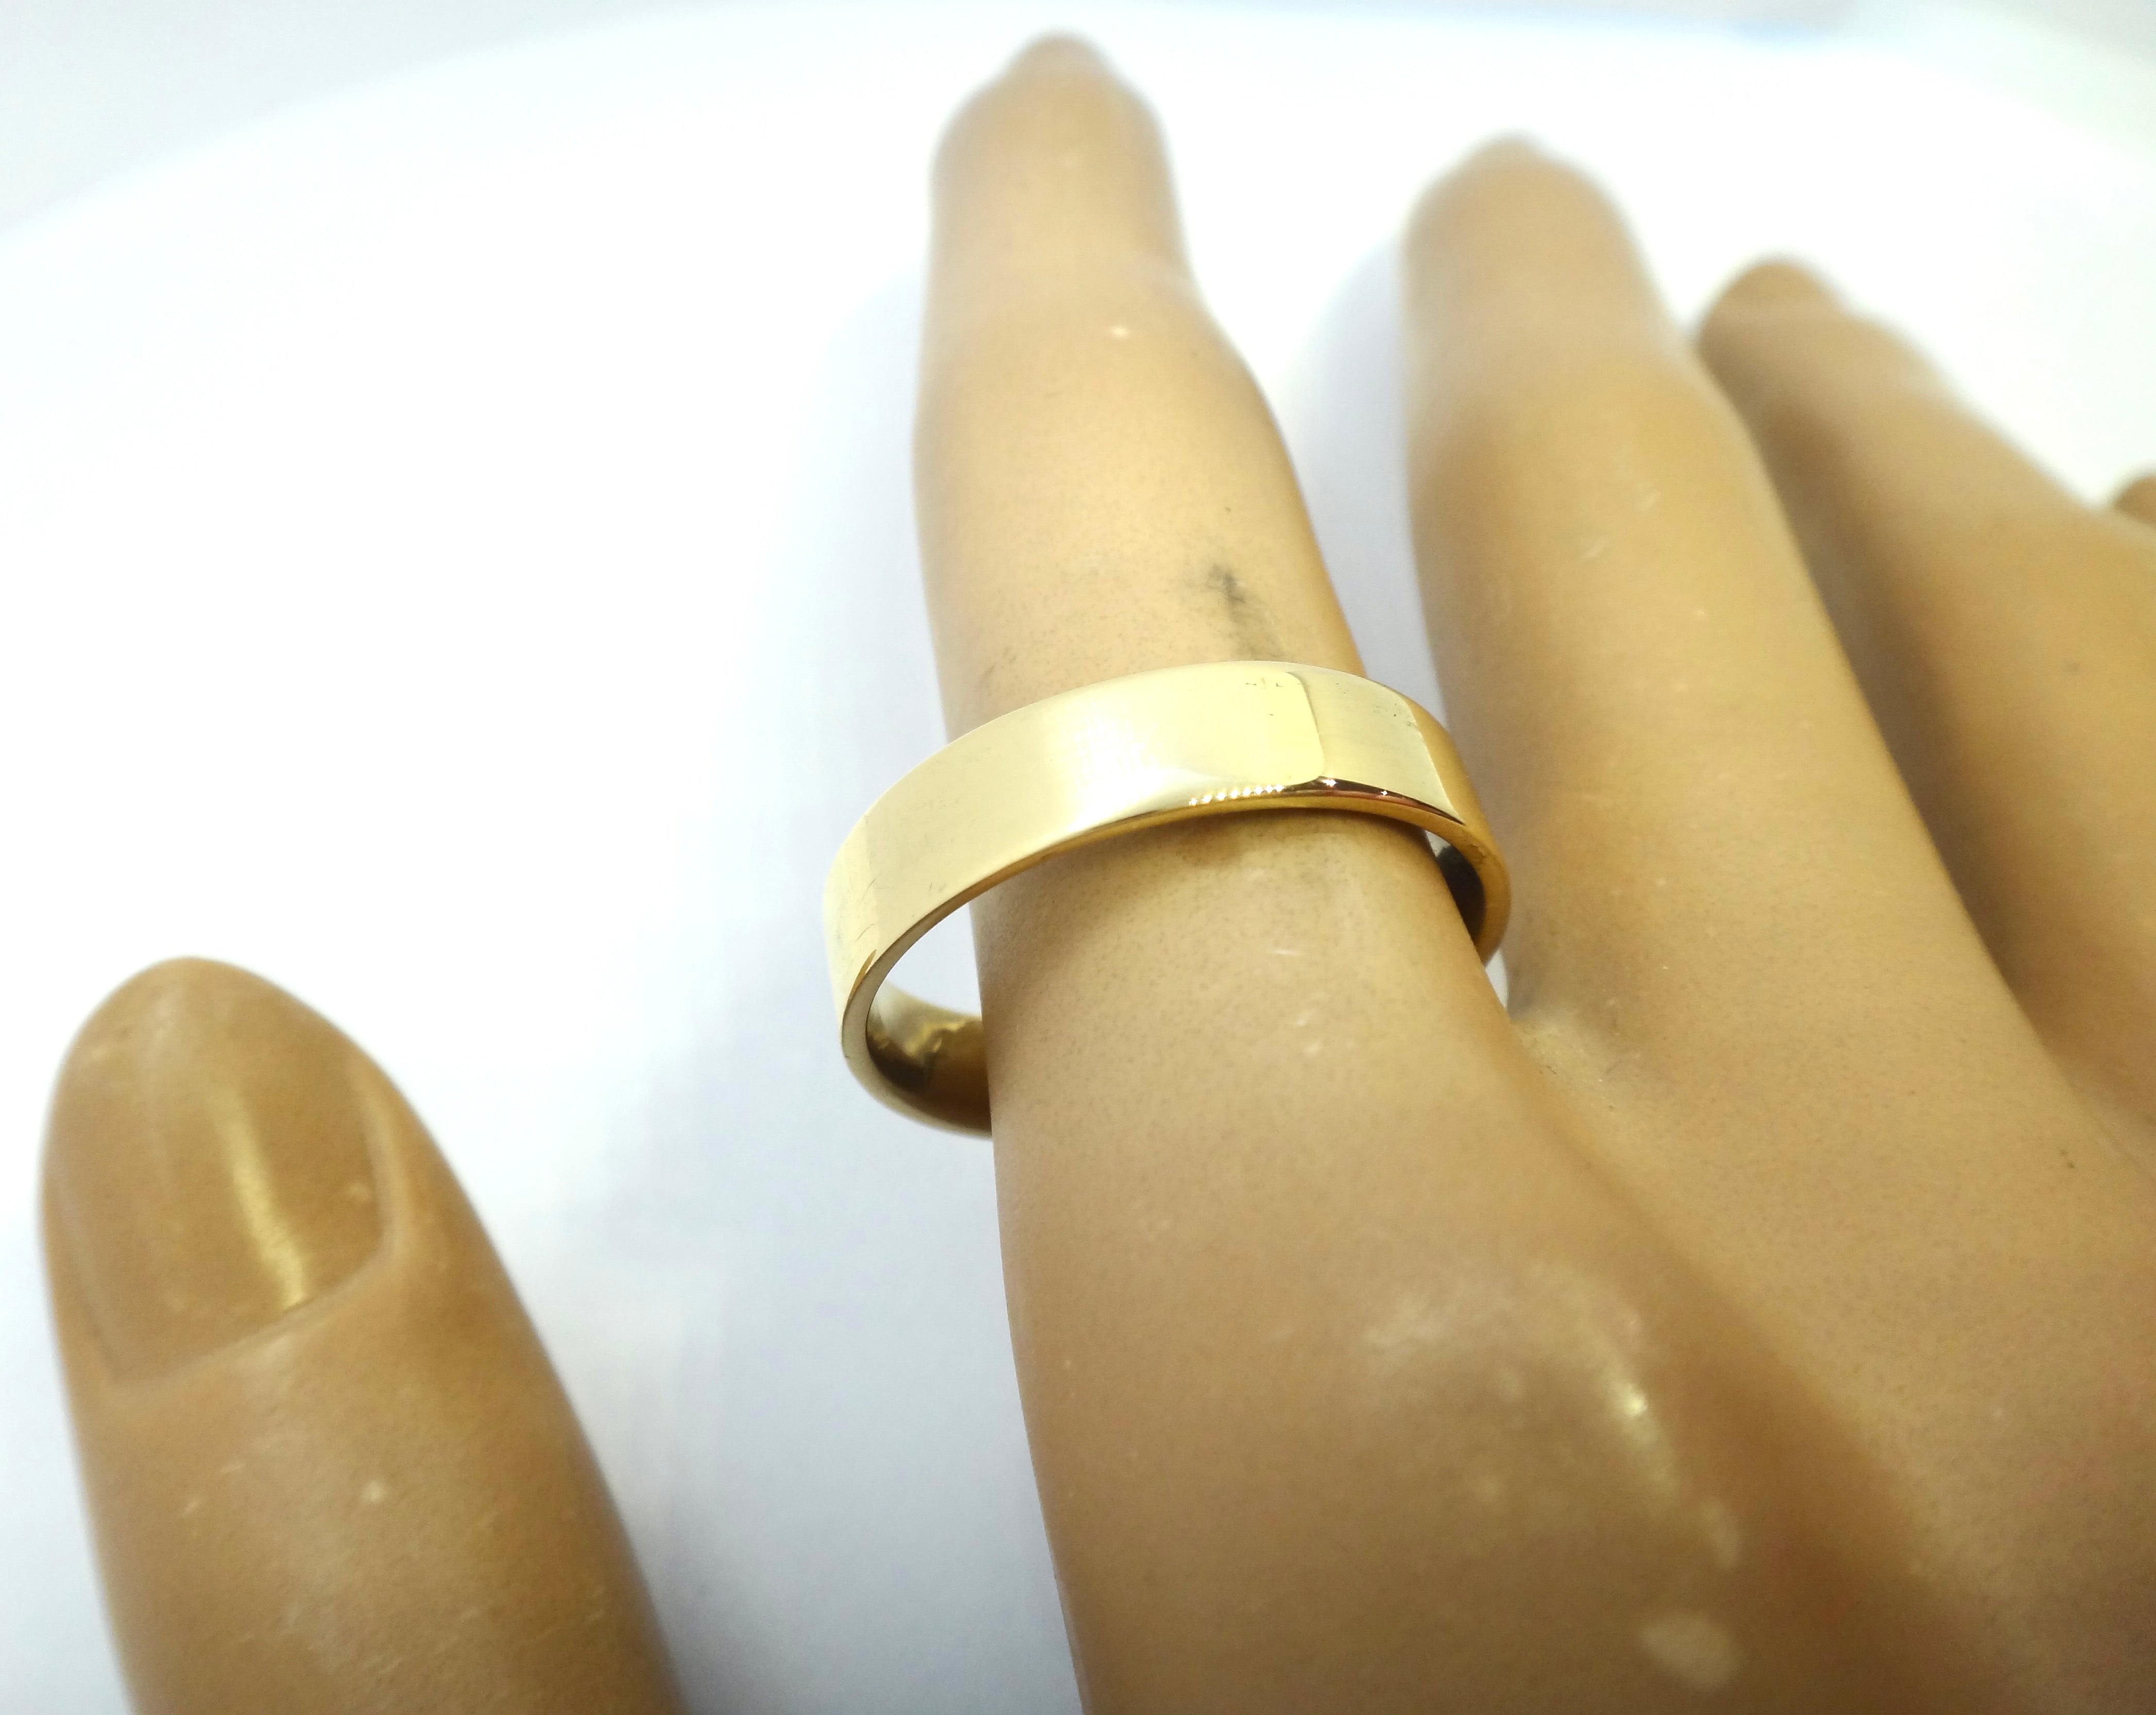 Mens 18ct Yellow GOLD Wedding Band Ring